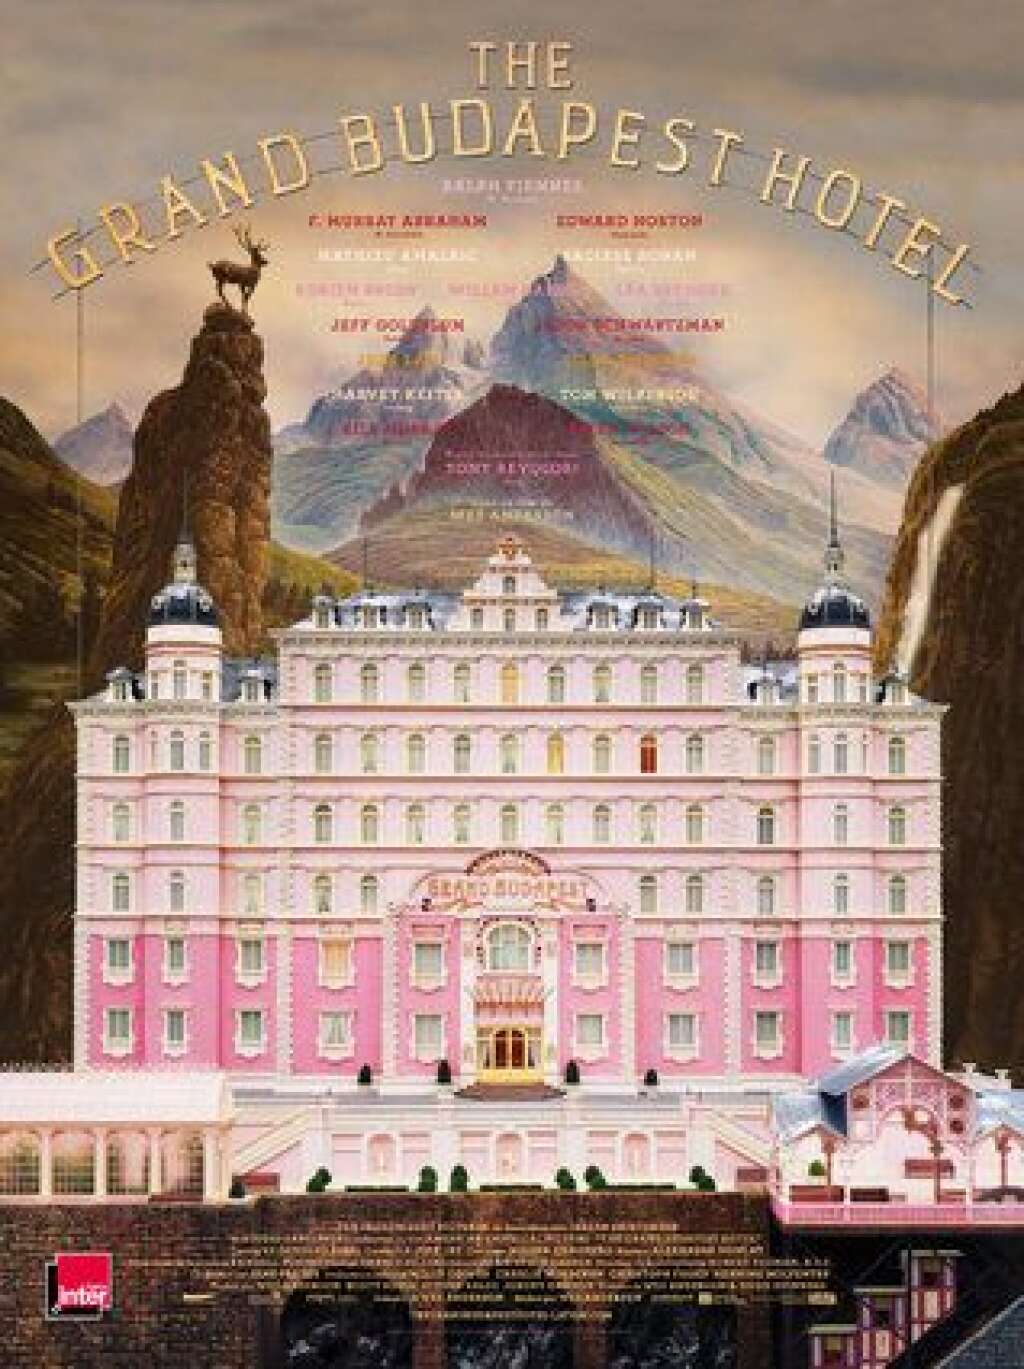 Meilleure comédie - "The Grand Budapest Hotel" de Wes Anderson